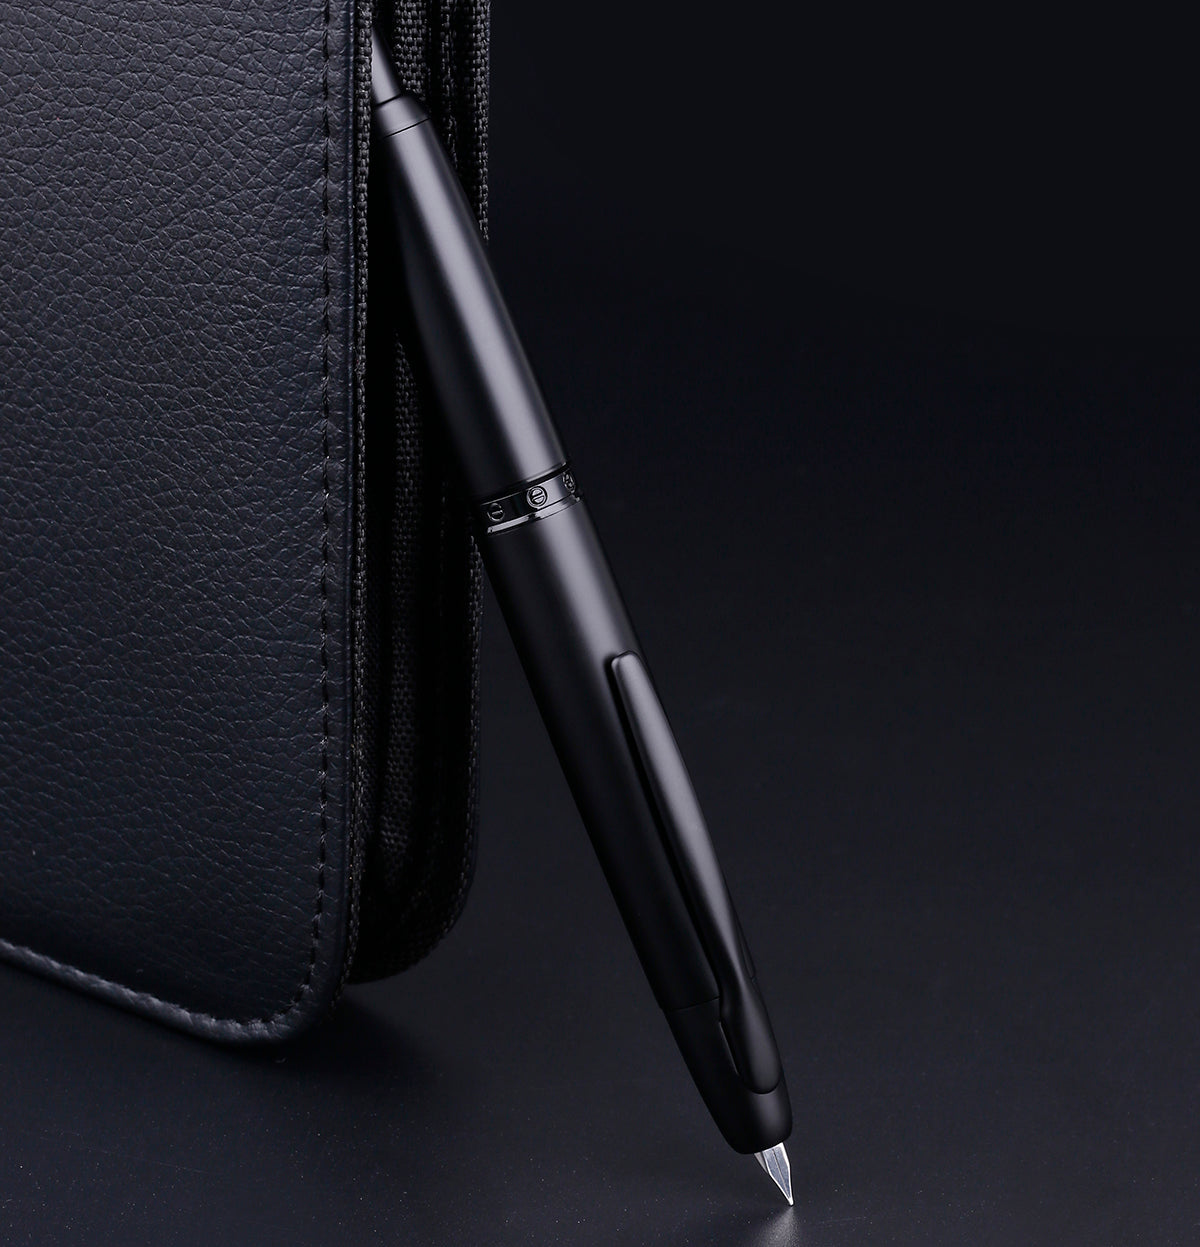 Nebula SmoothScribe Retractable Pen